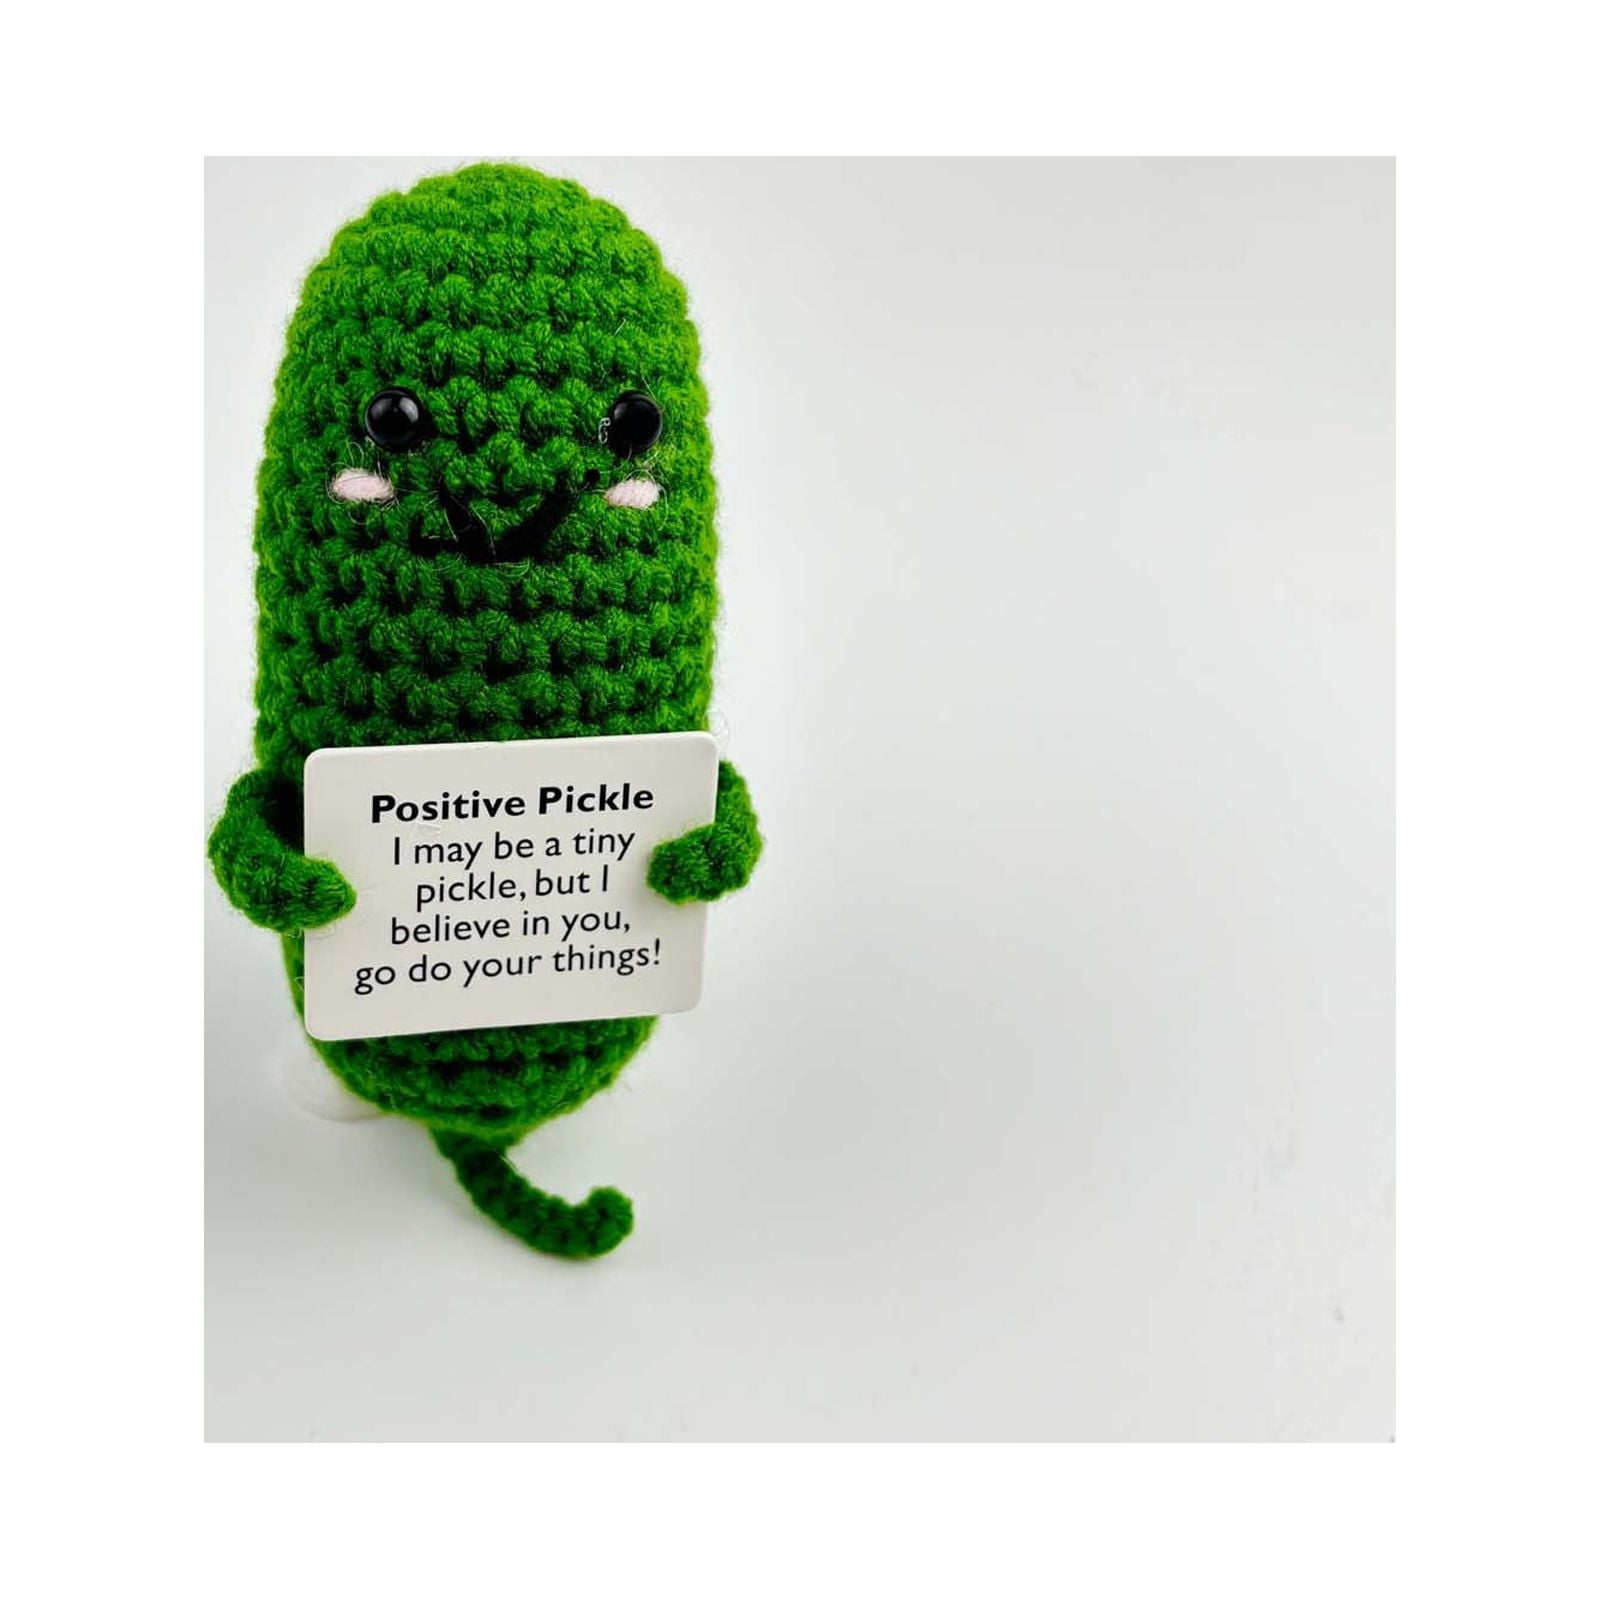 Positive Pickle!!!!!!